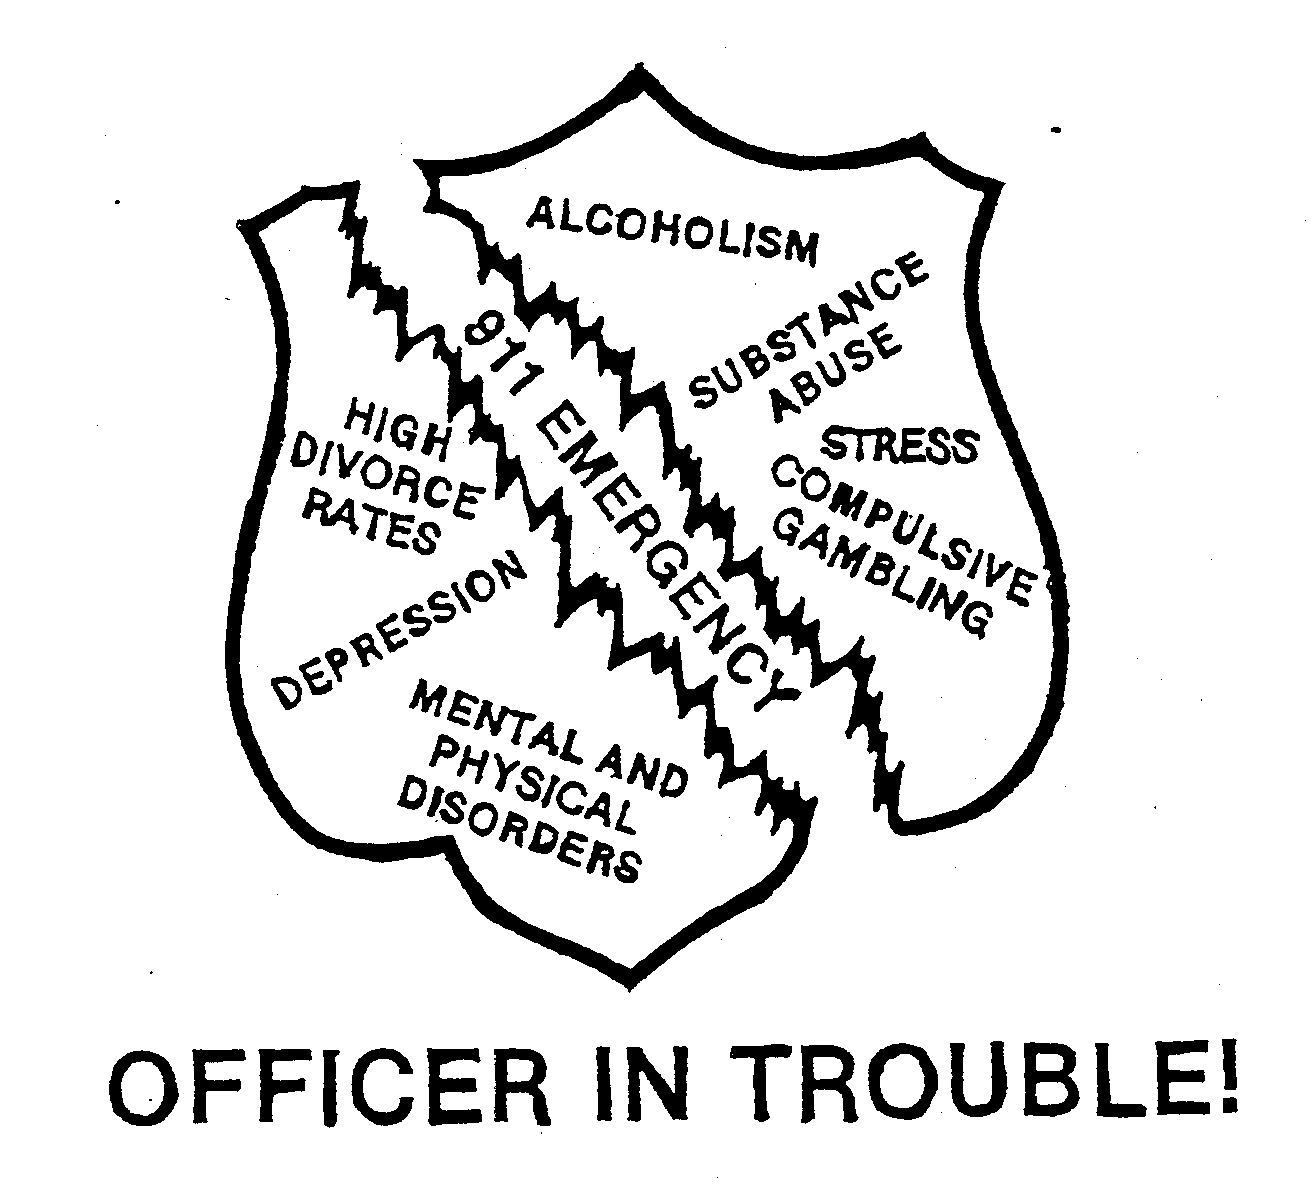  OFFICER IN TROUBLE 911 EMERGENCY